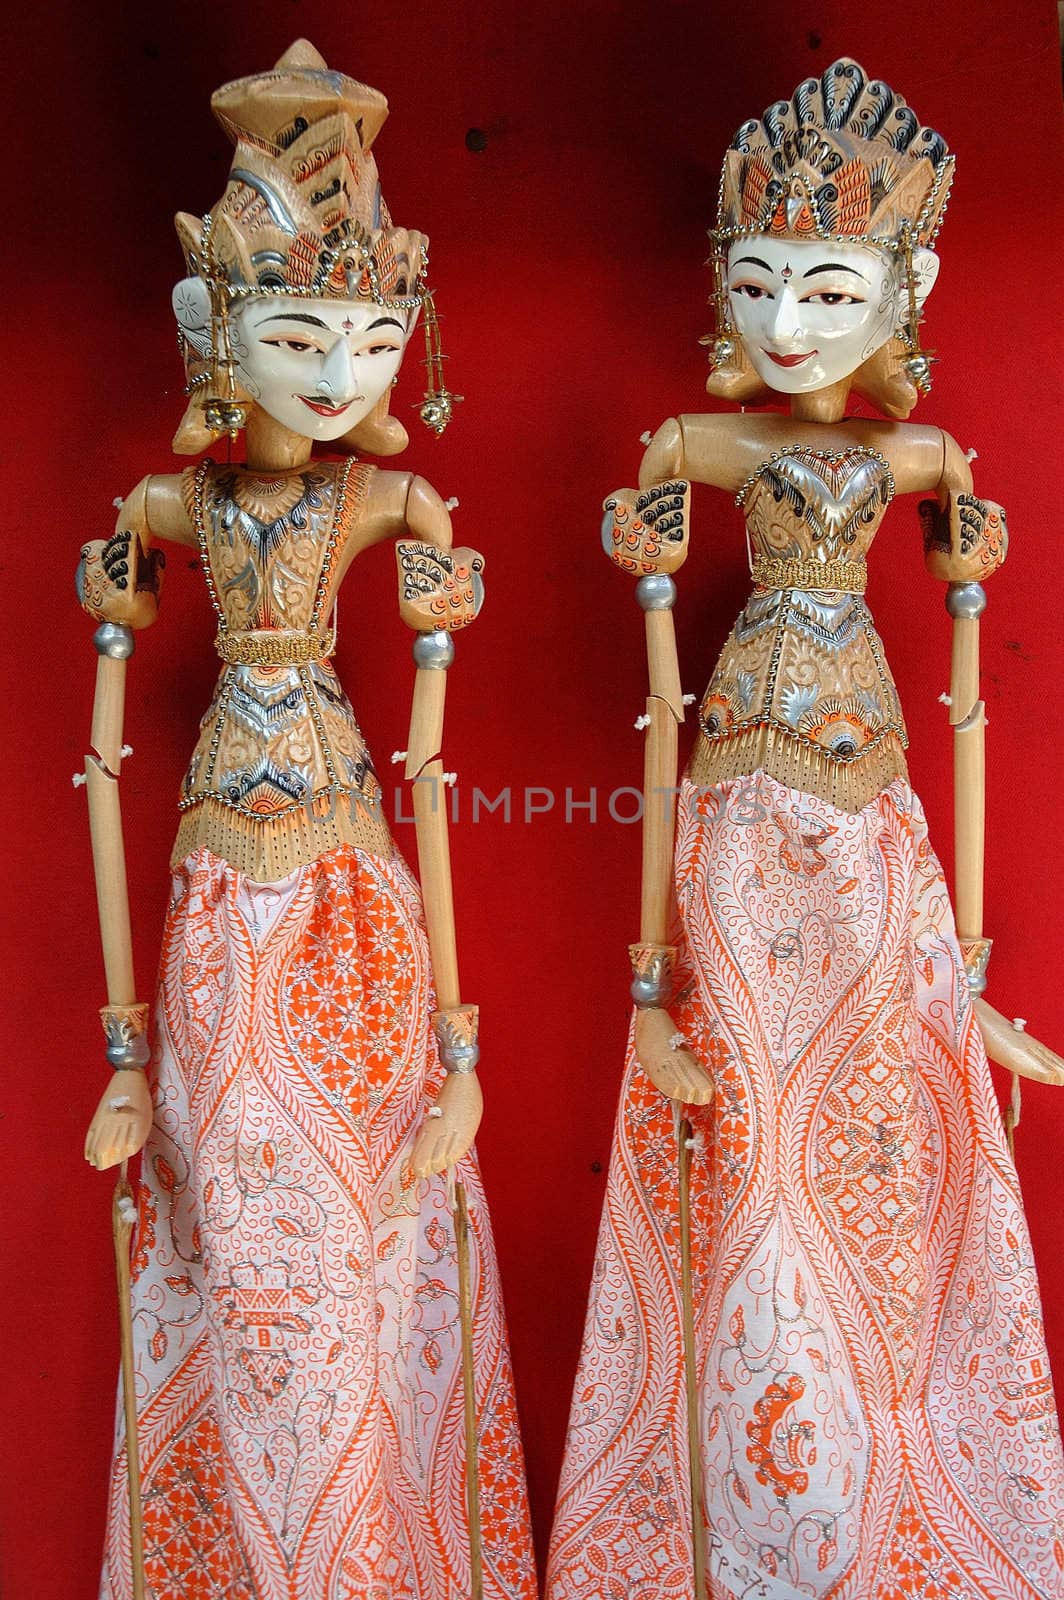 wayang golek is sundanese traditional art puppet